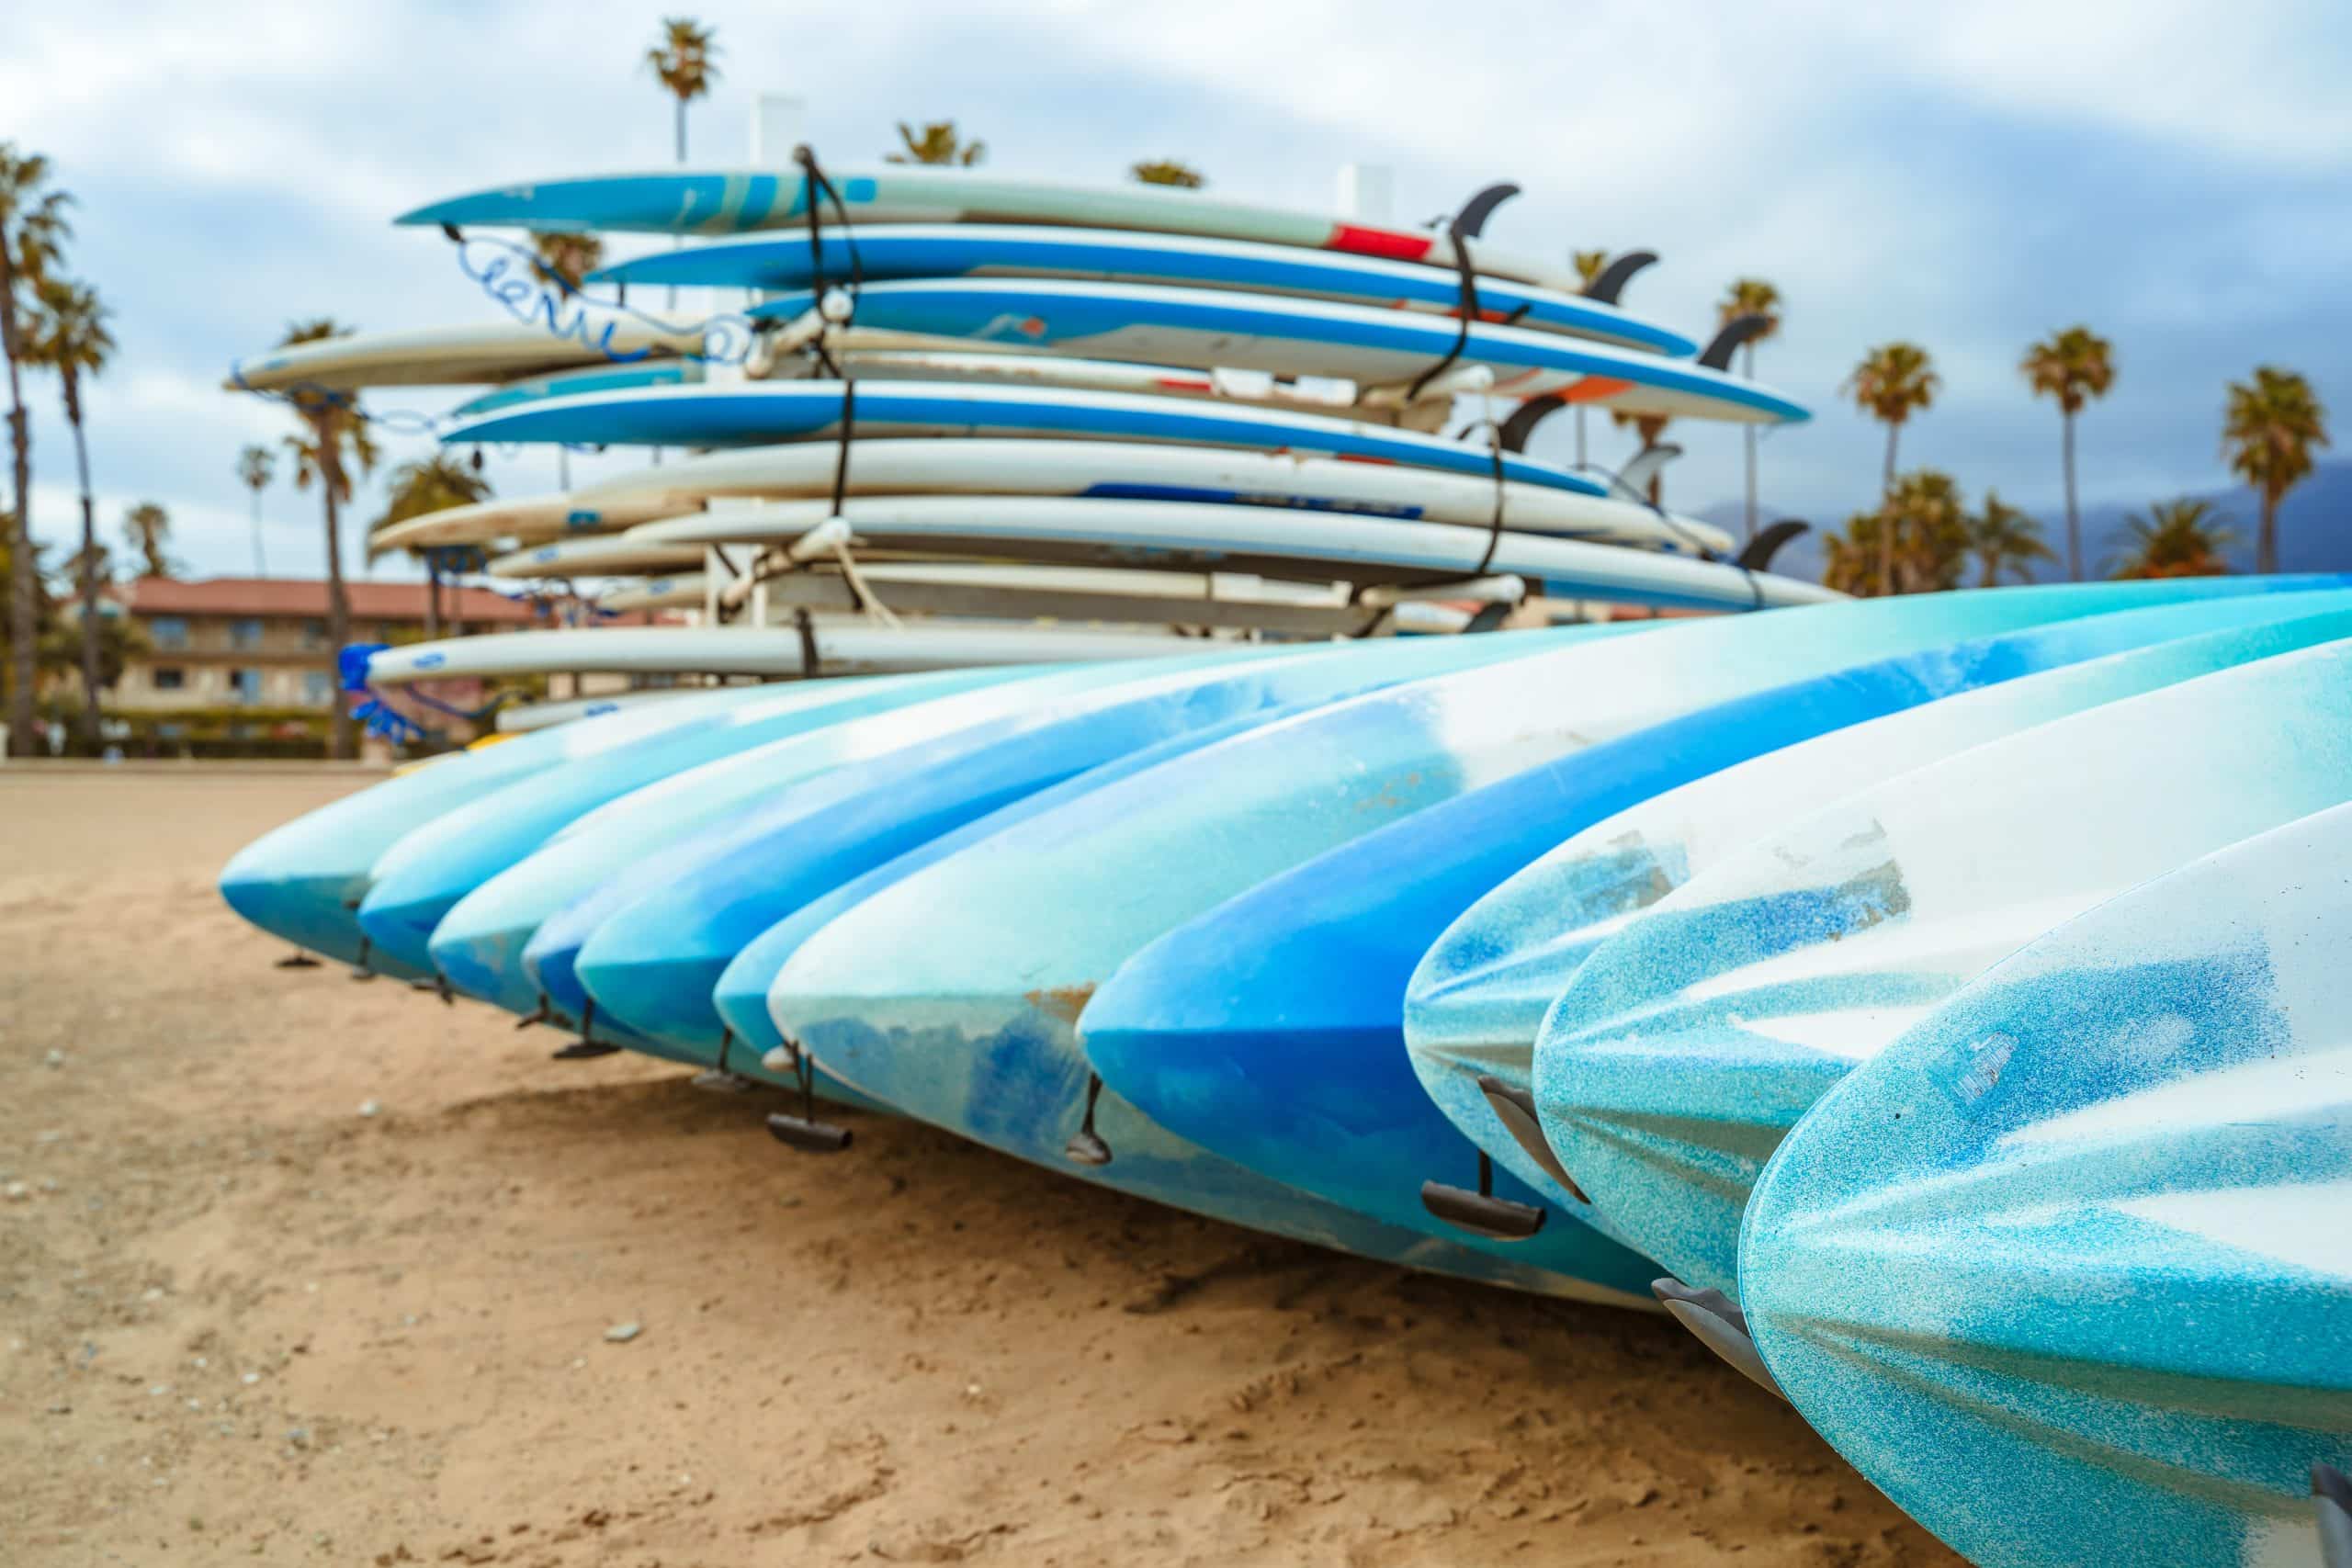 Surfboards on the beach Santa Barbara, California, USA